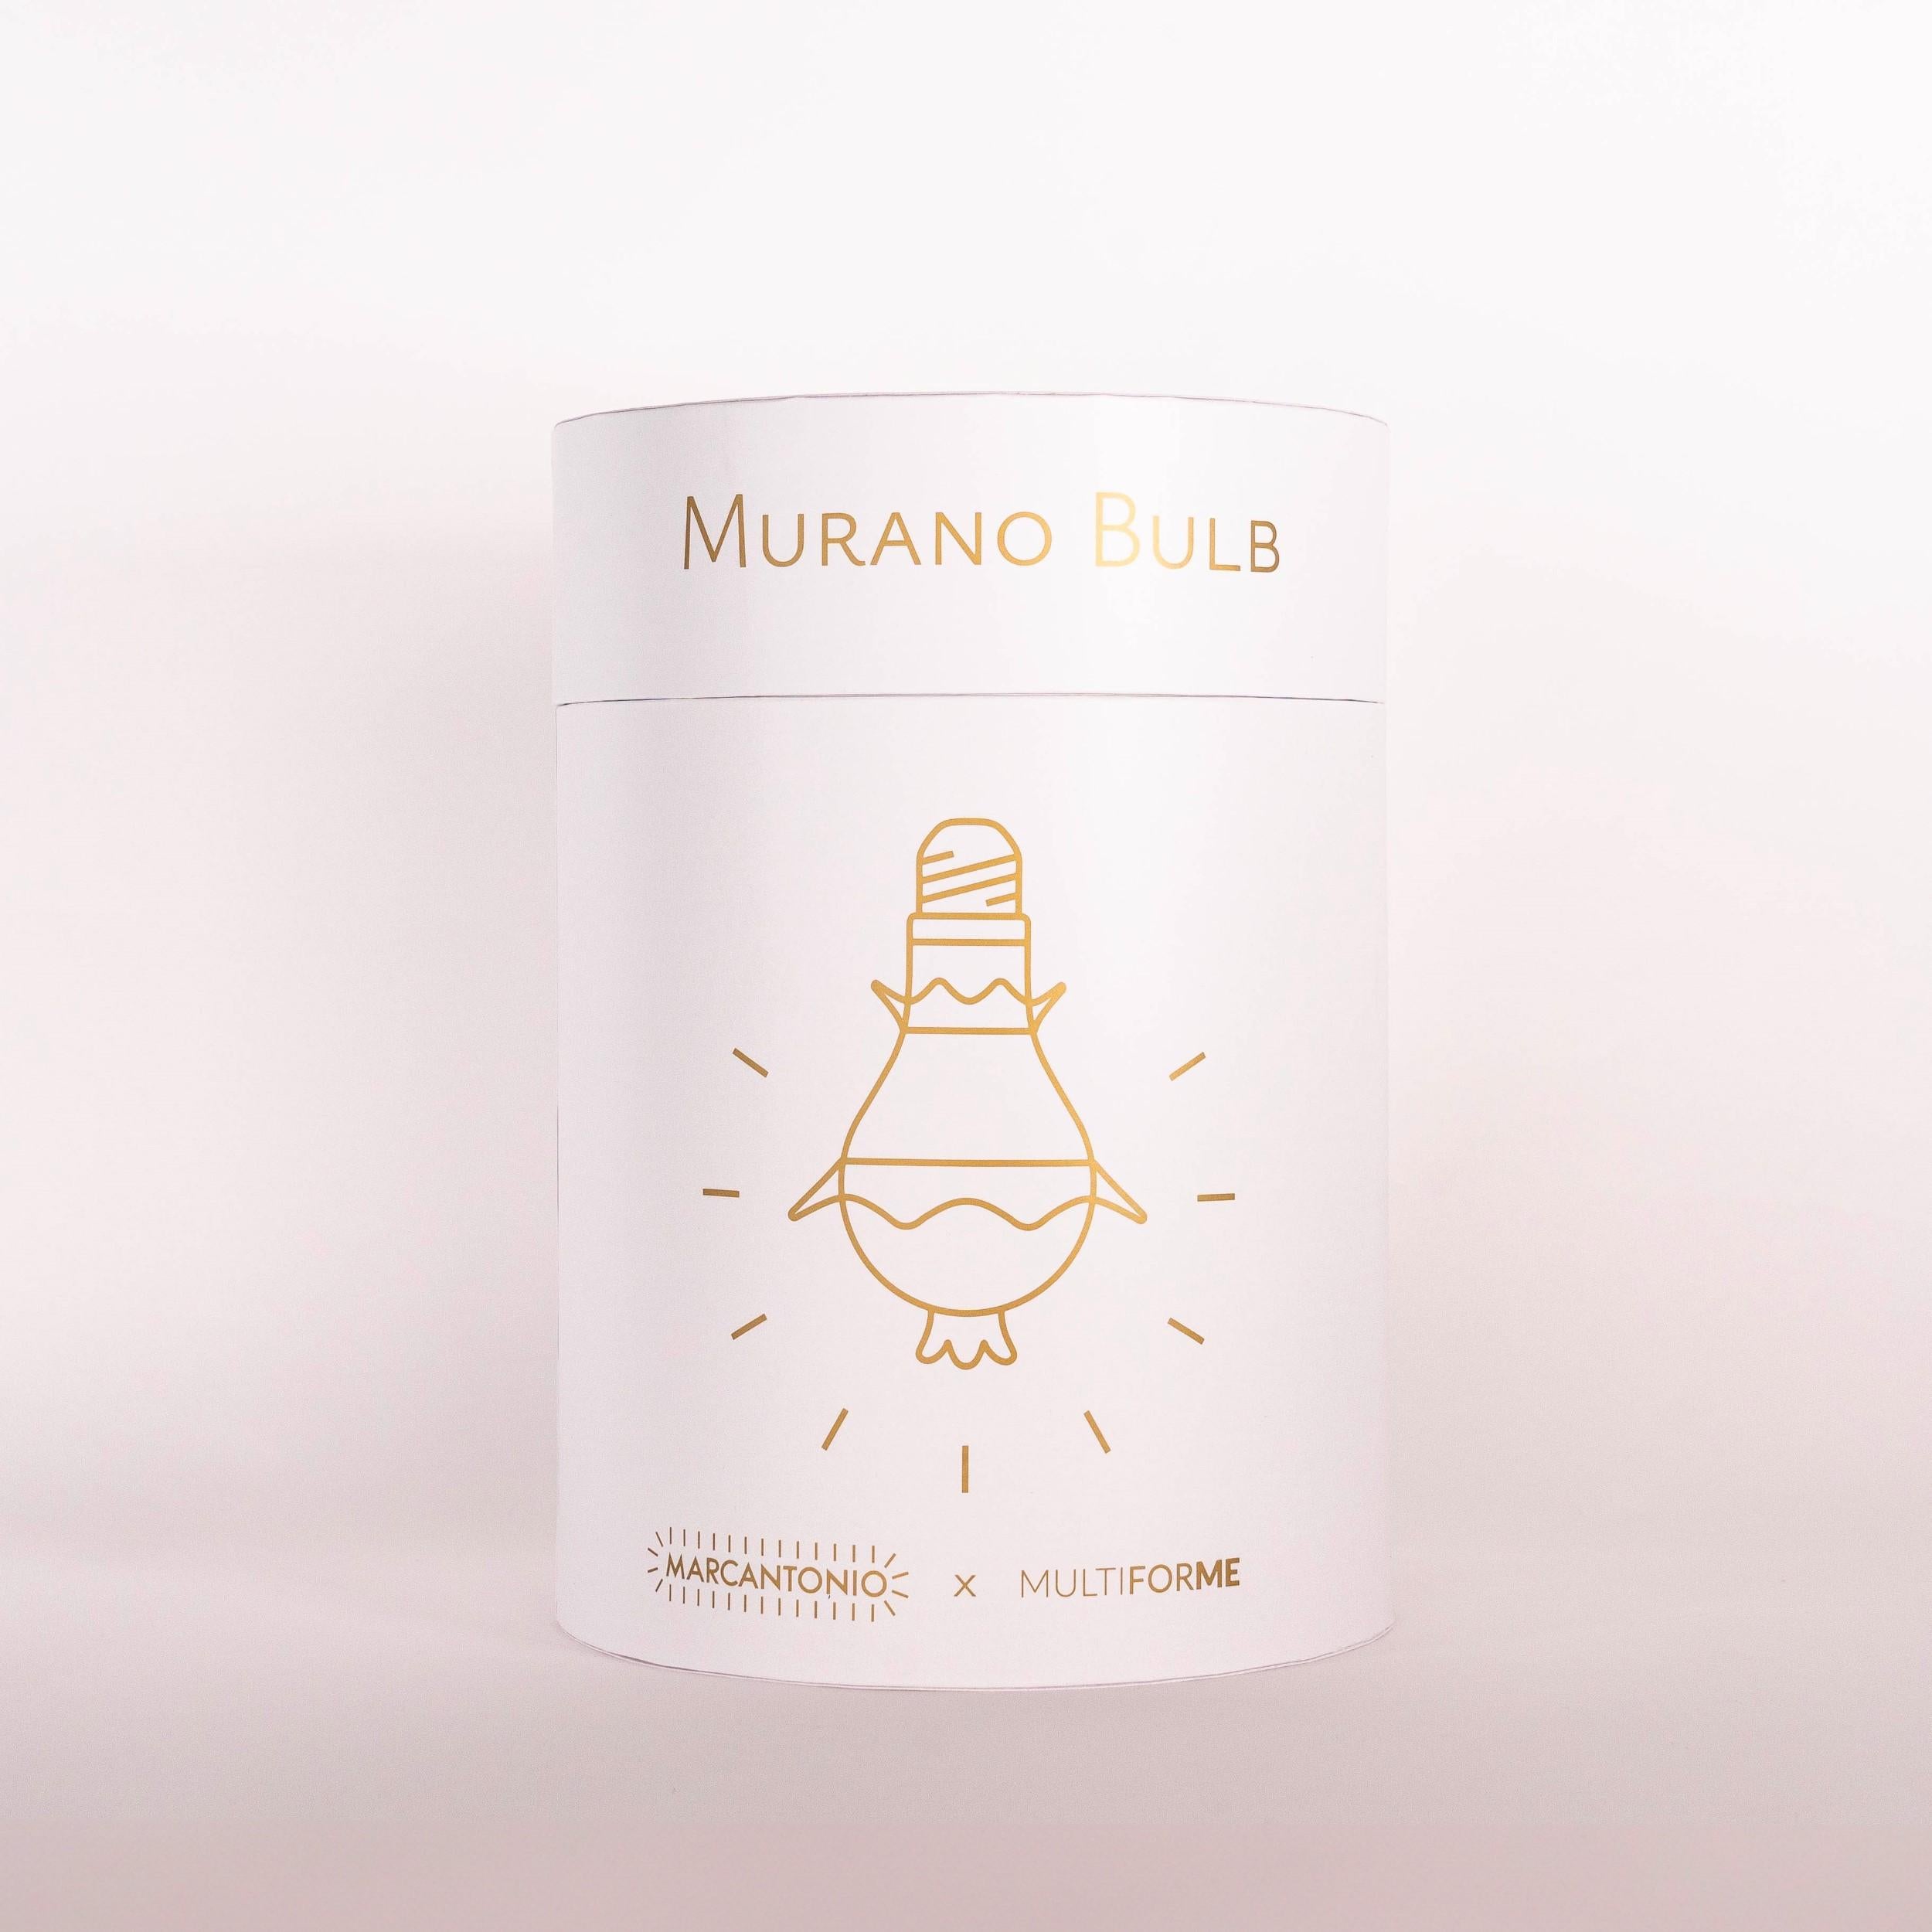 Artistic glass lightbulb chandelier Murano Bulb Marcantonio X Multiforme #03 For Sale 4